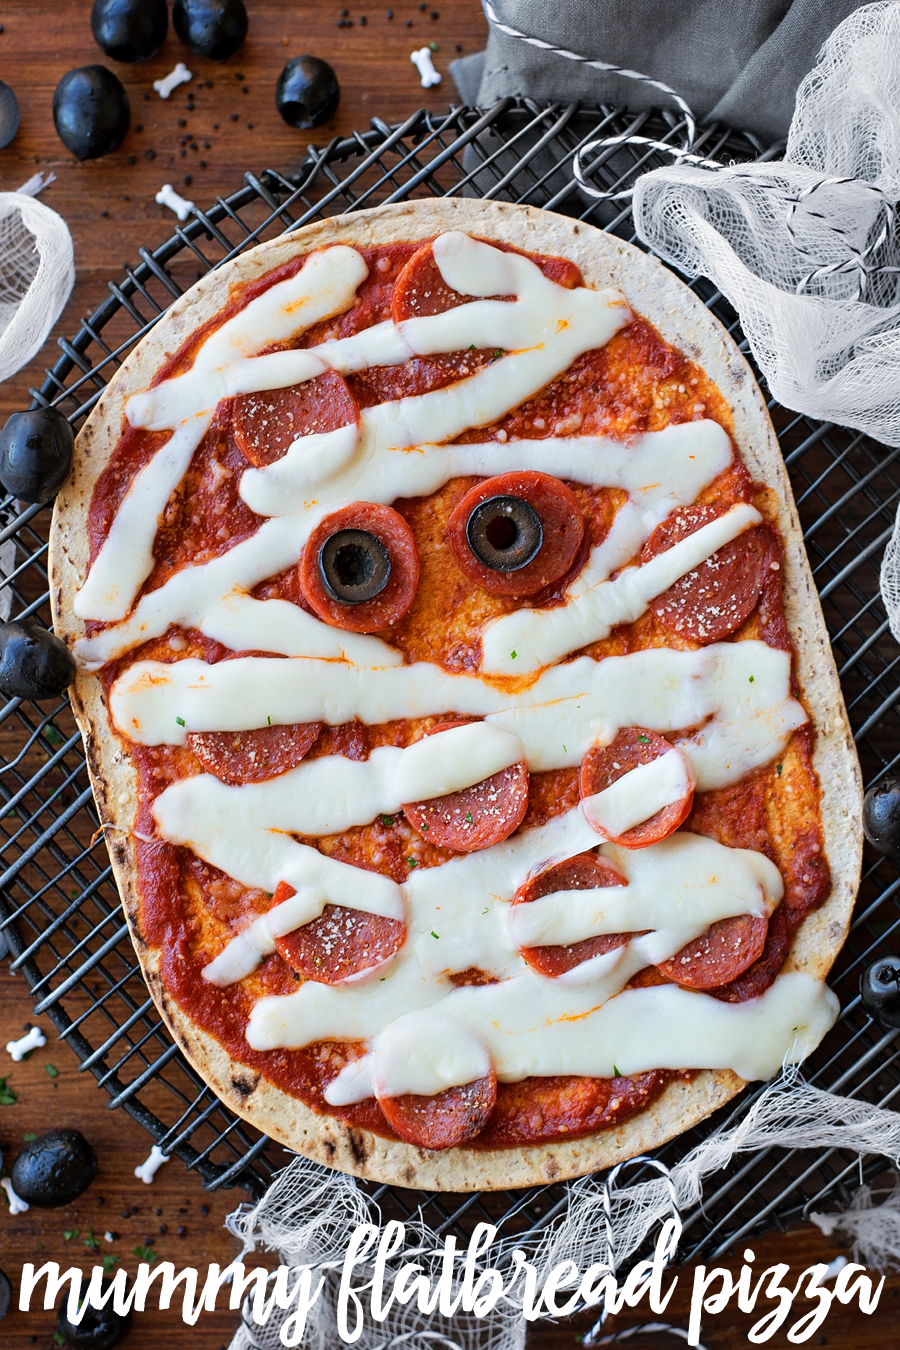 Mummy flatbread pizza with pepperoni and mozerella cheese.